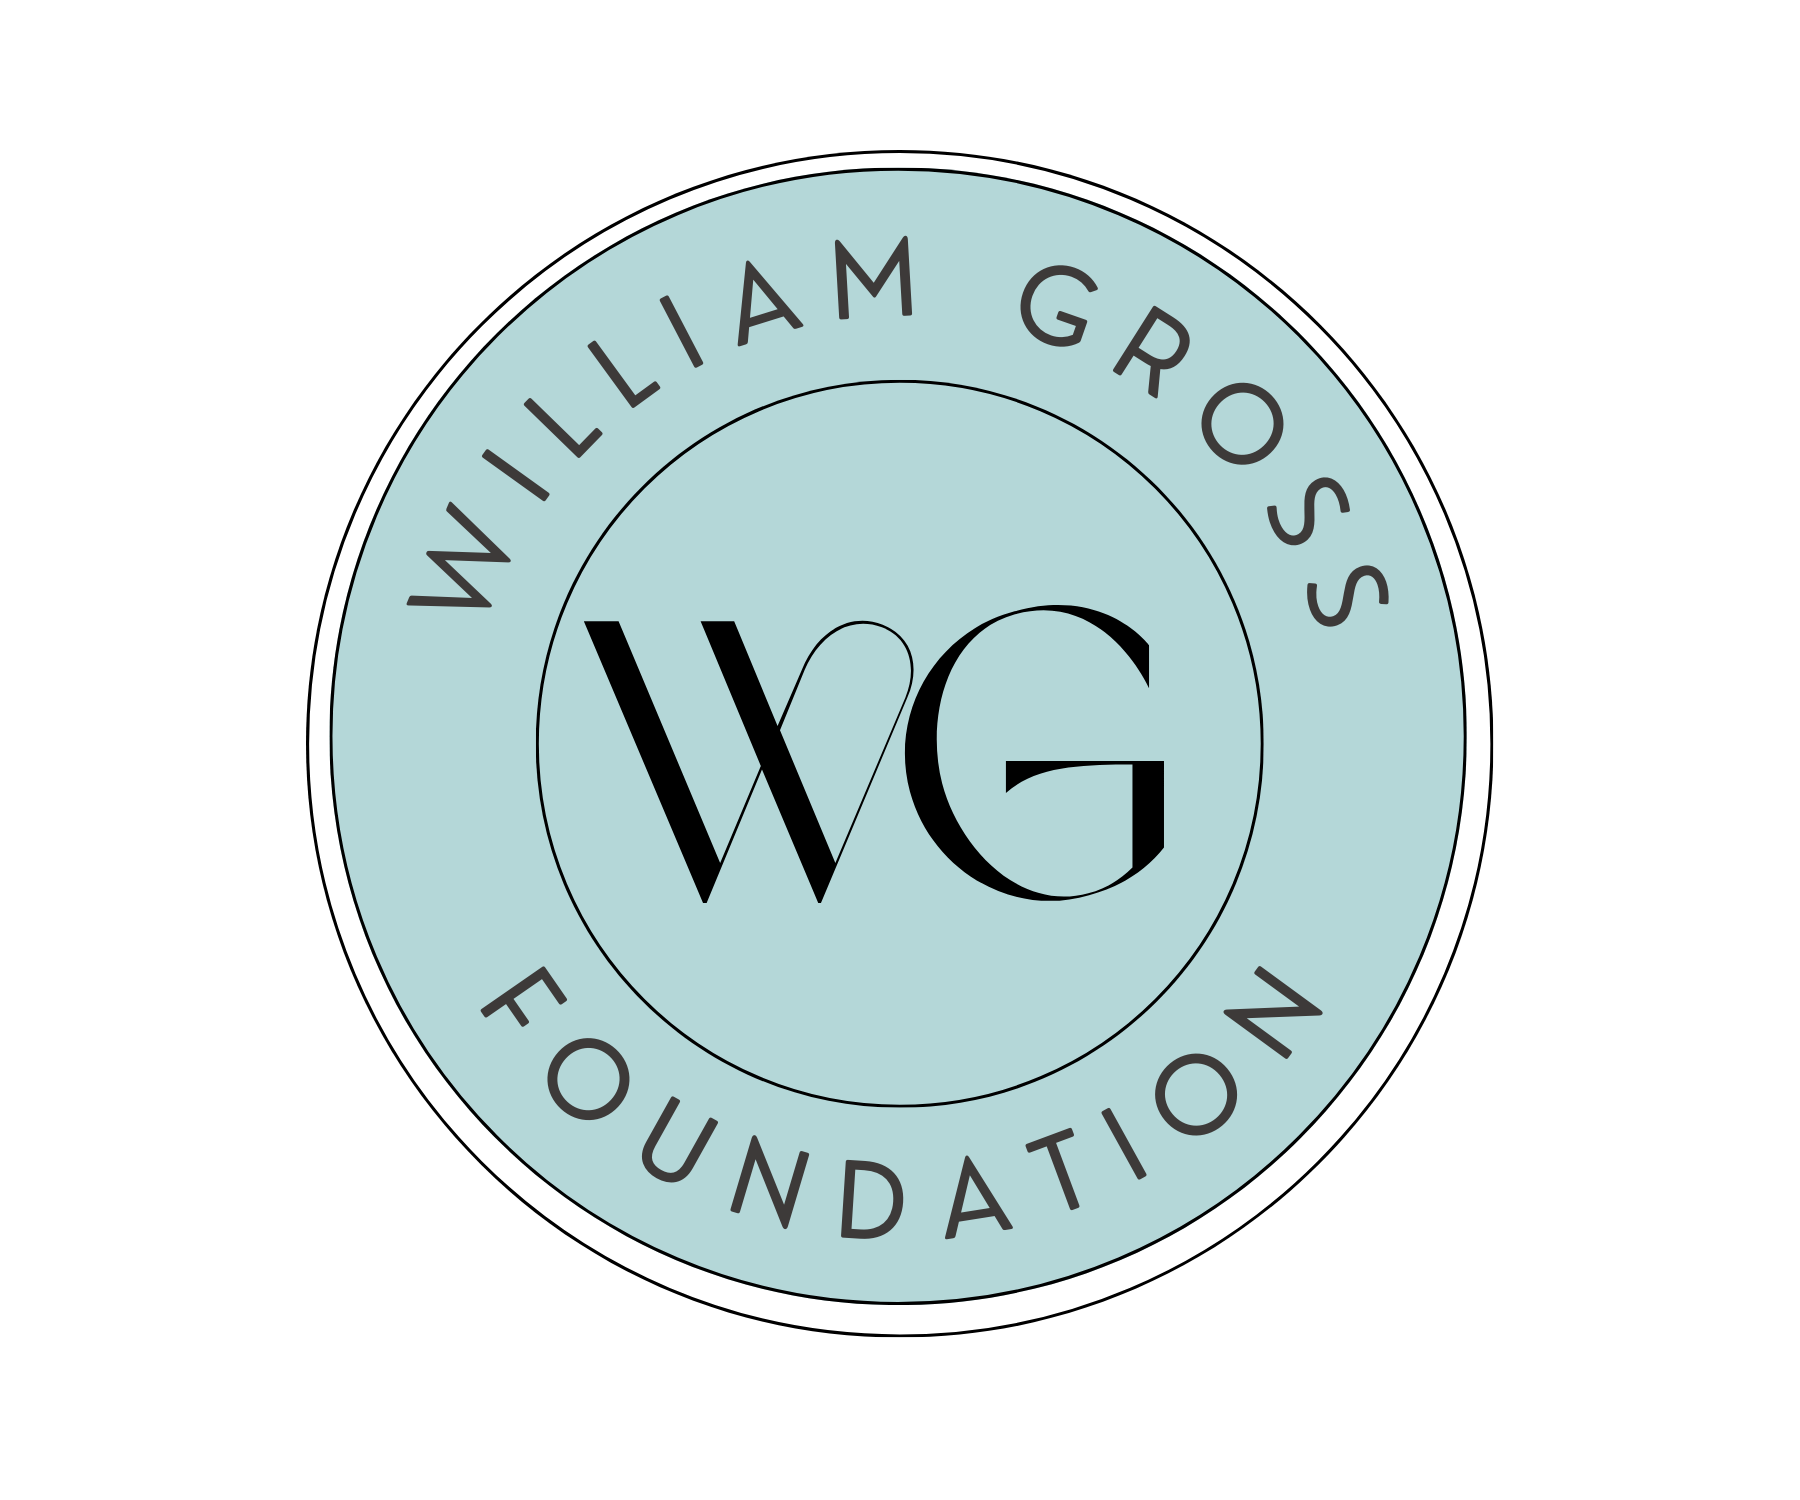 William Gross Foundation